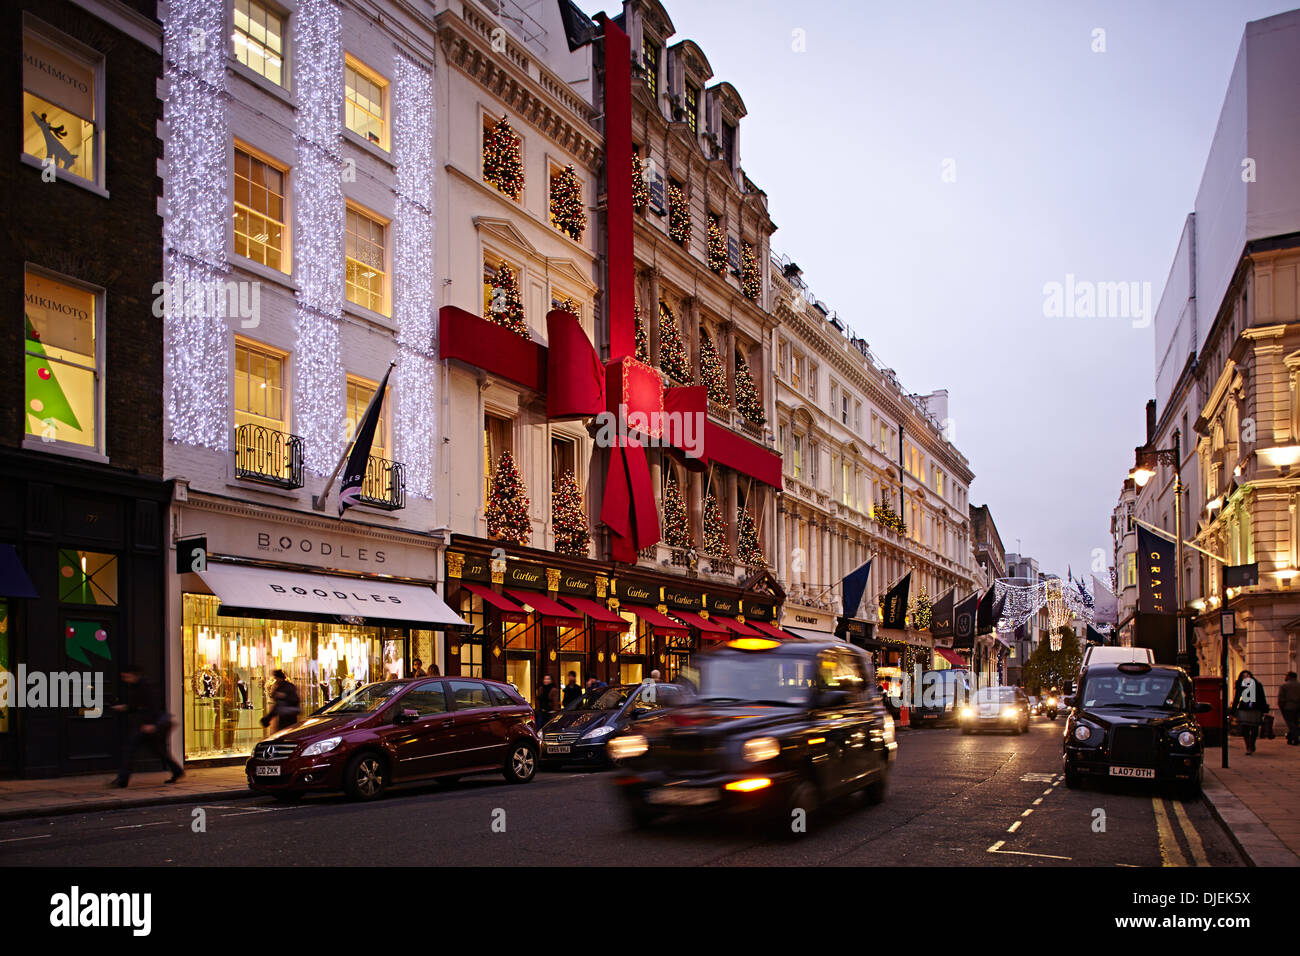 Old & New Bond Street, London shopping